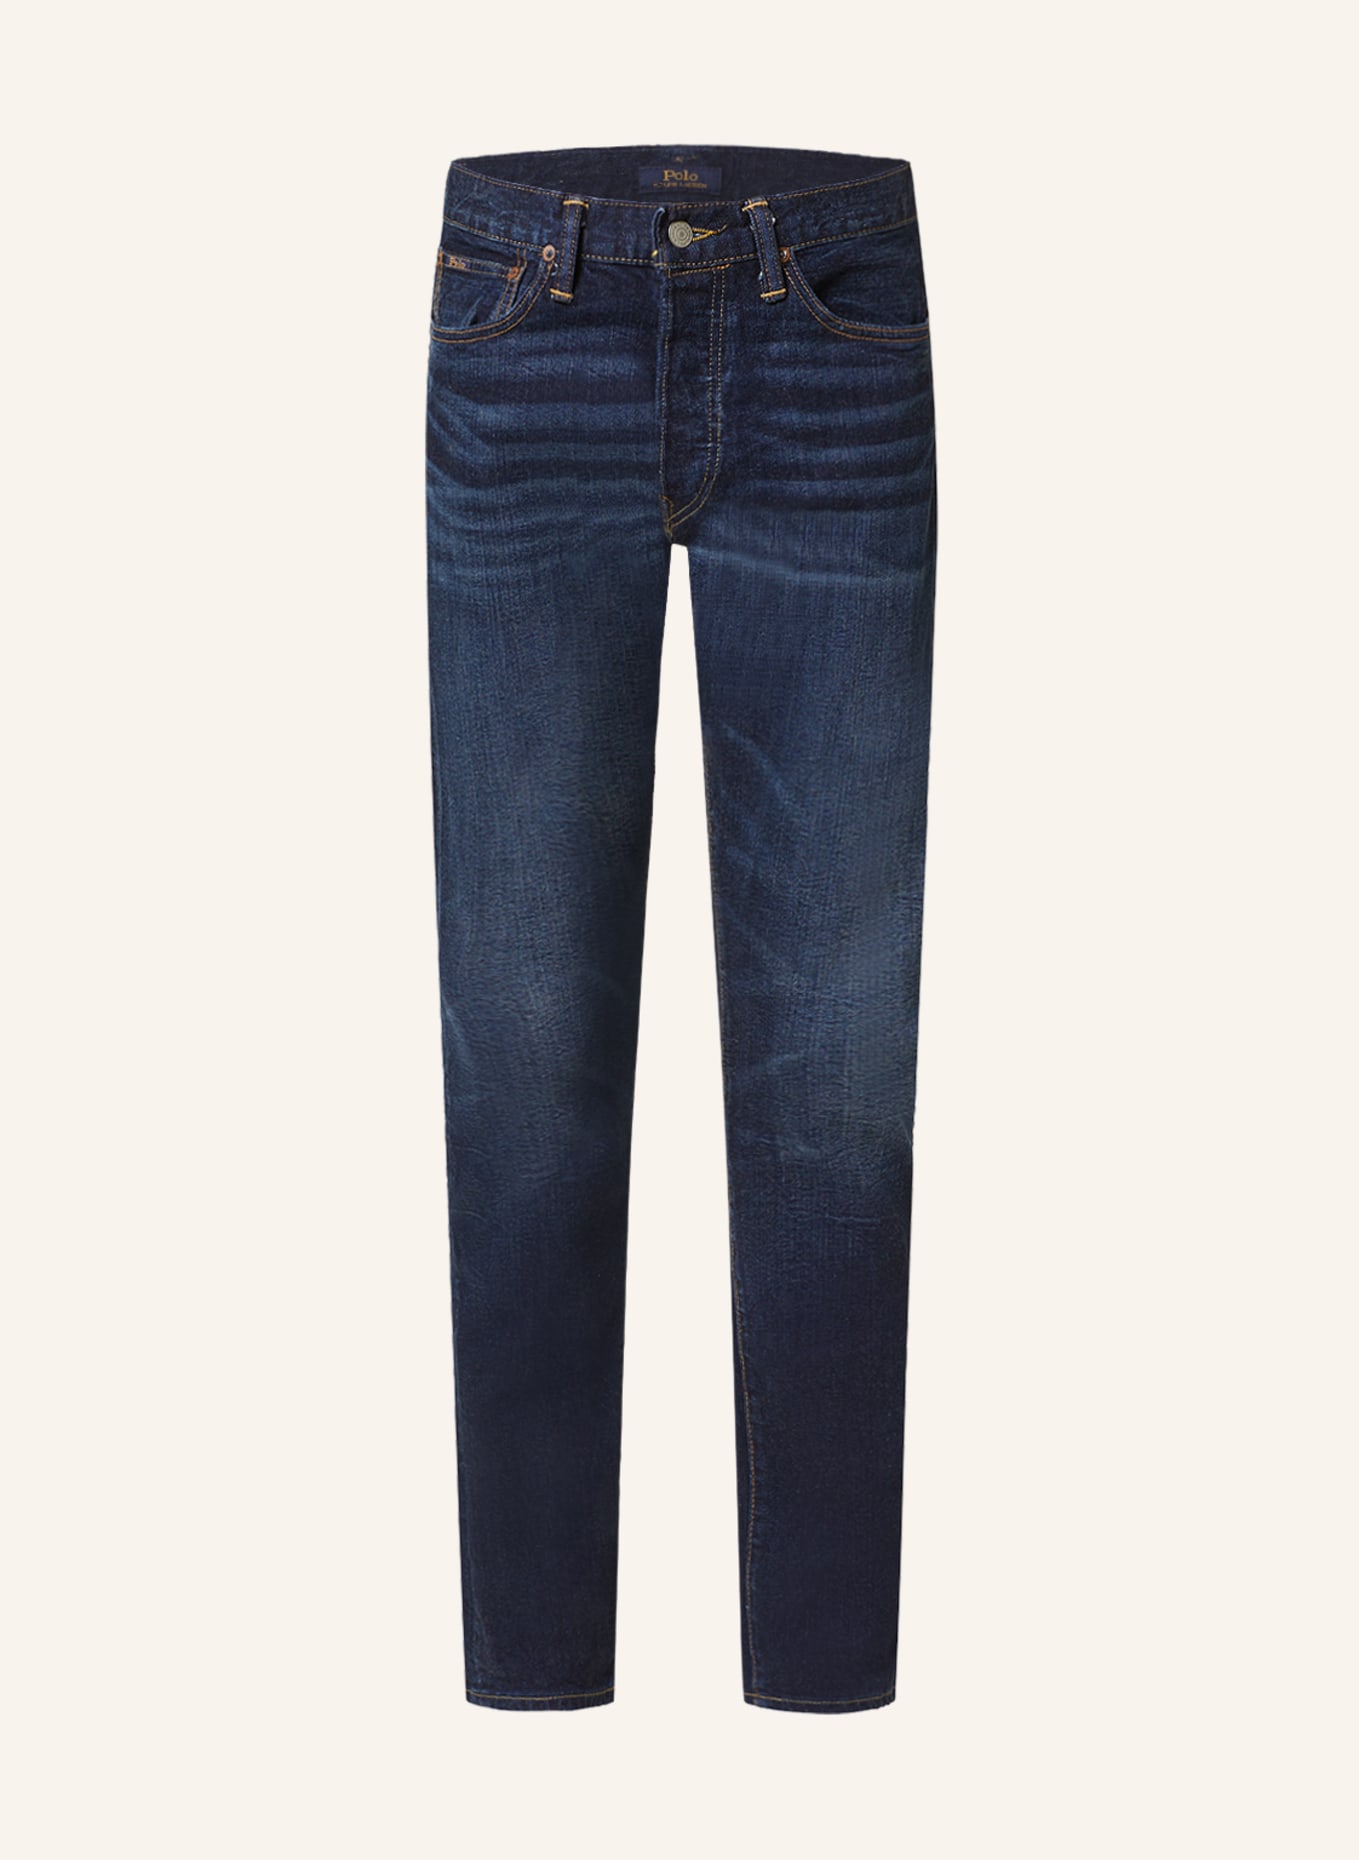 POLO RALPH LAUREN Jeans SULLIVAN Slim Fit, Farbe: 001 WESTLYN STRETCH (Bild 1)